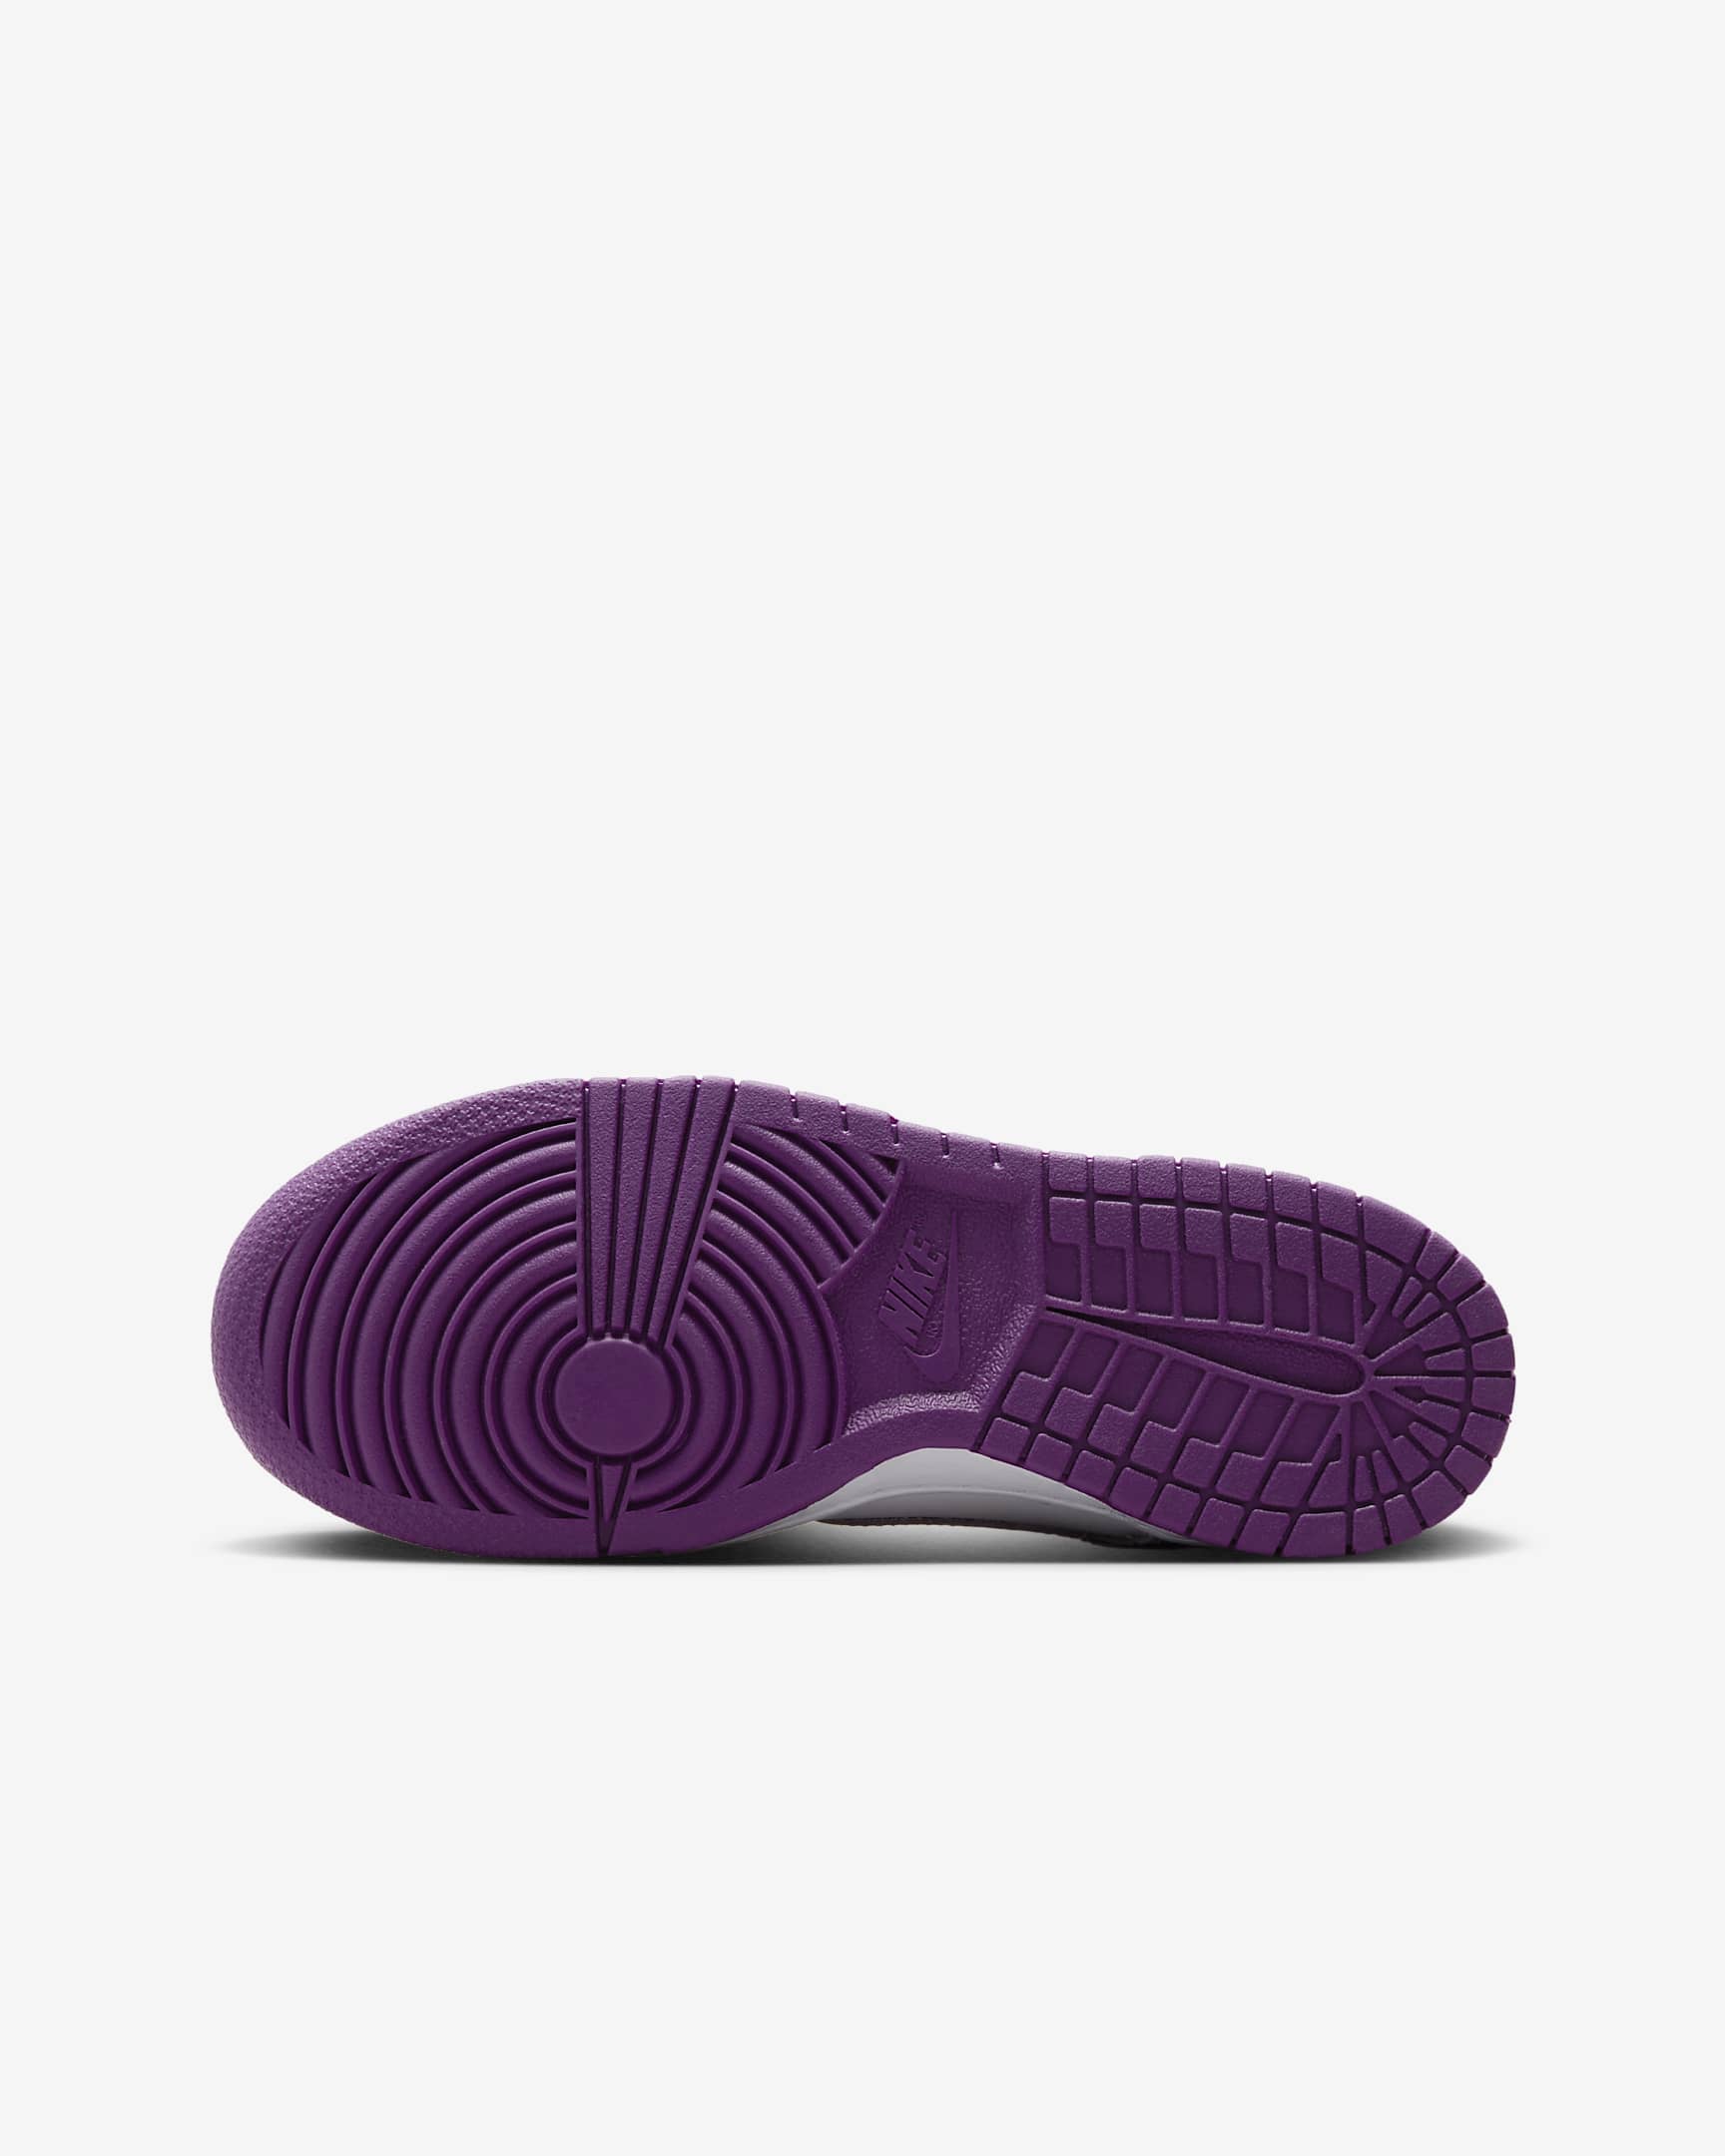 Nike Dunk Low Big Kids' Shoes - White/Platinum Violet/Viotech